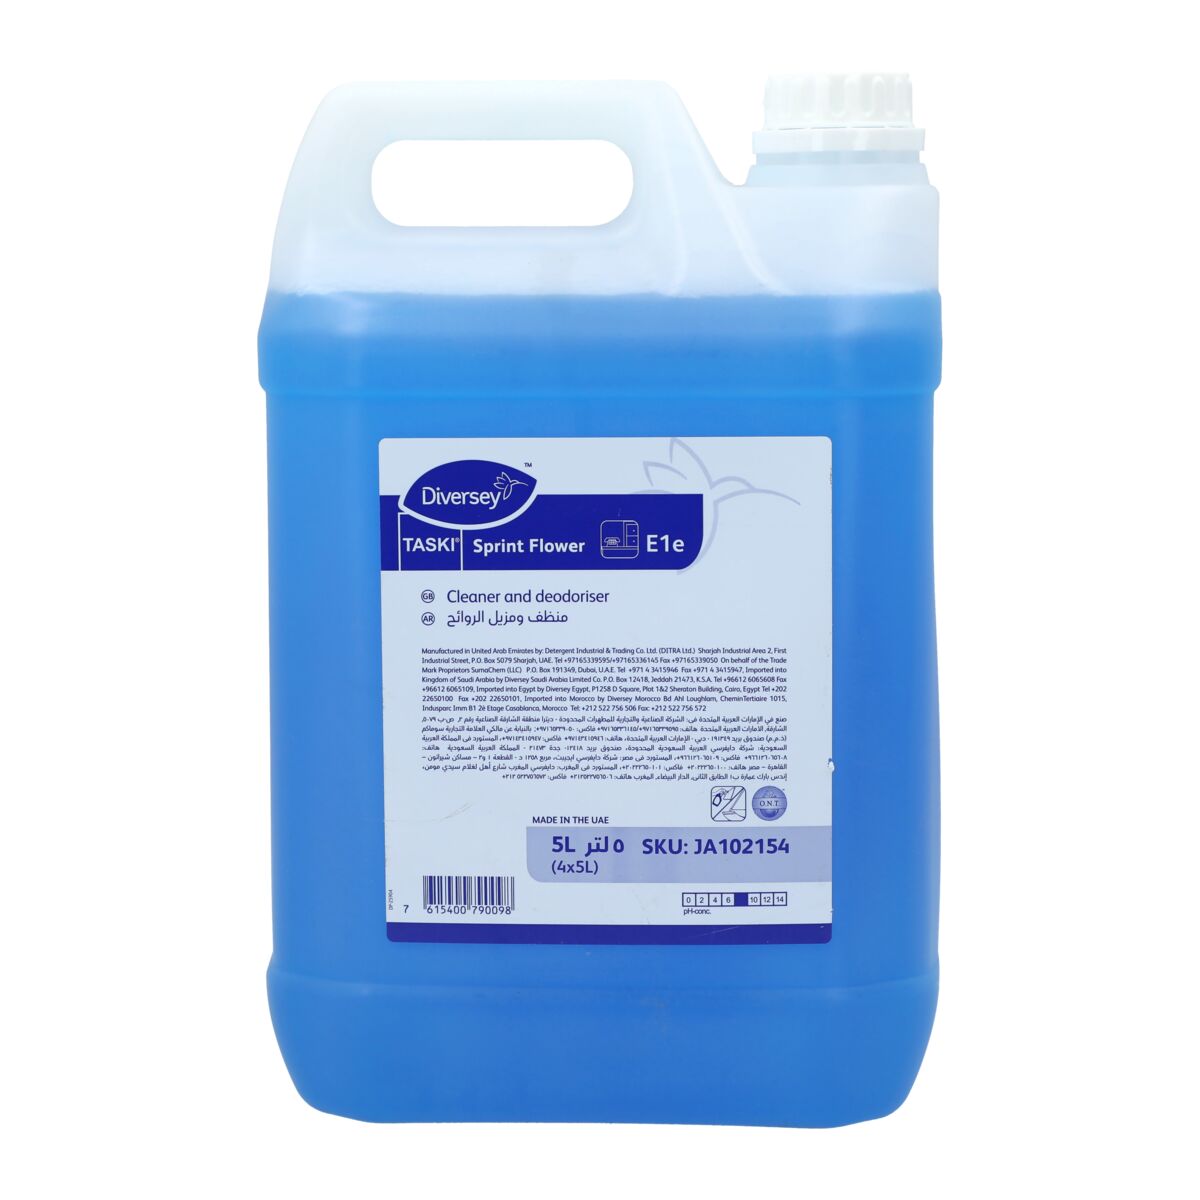 Diversey Sprint Flower Floor Cleaner and Deodoriser Blue 5 Liter   